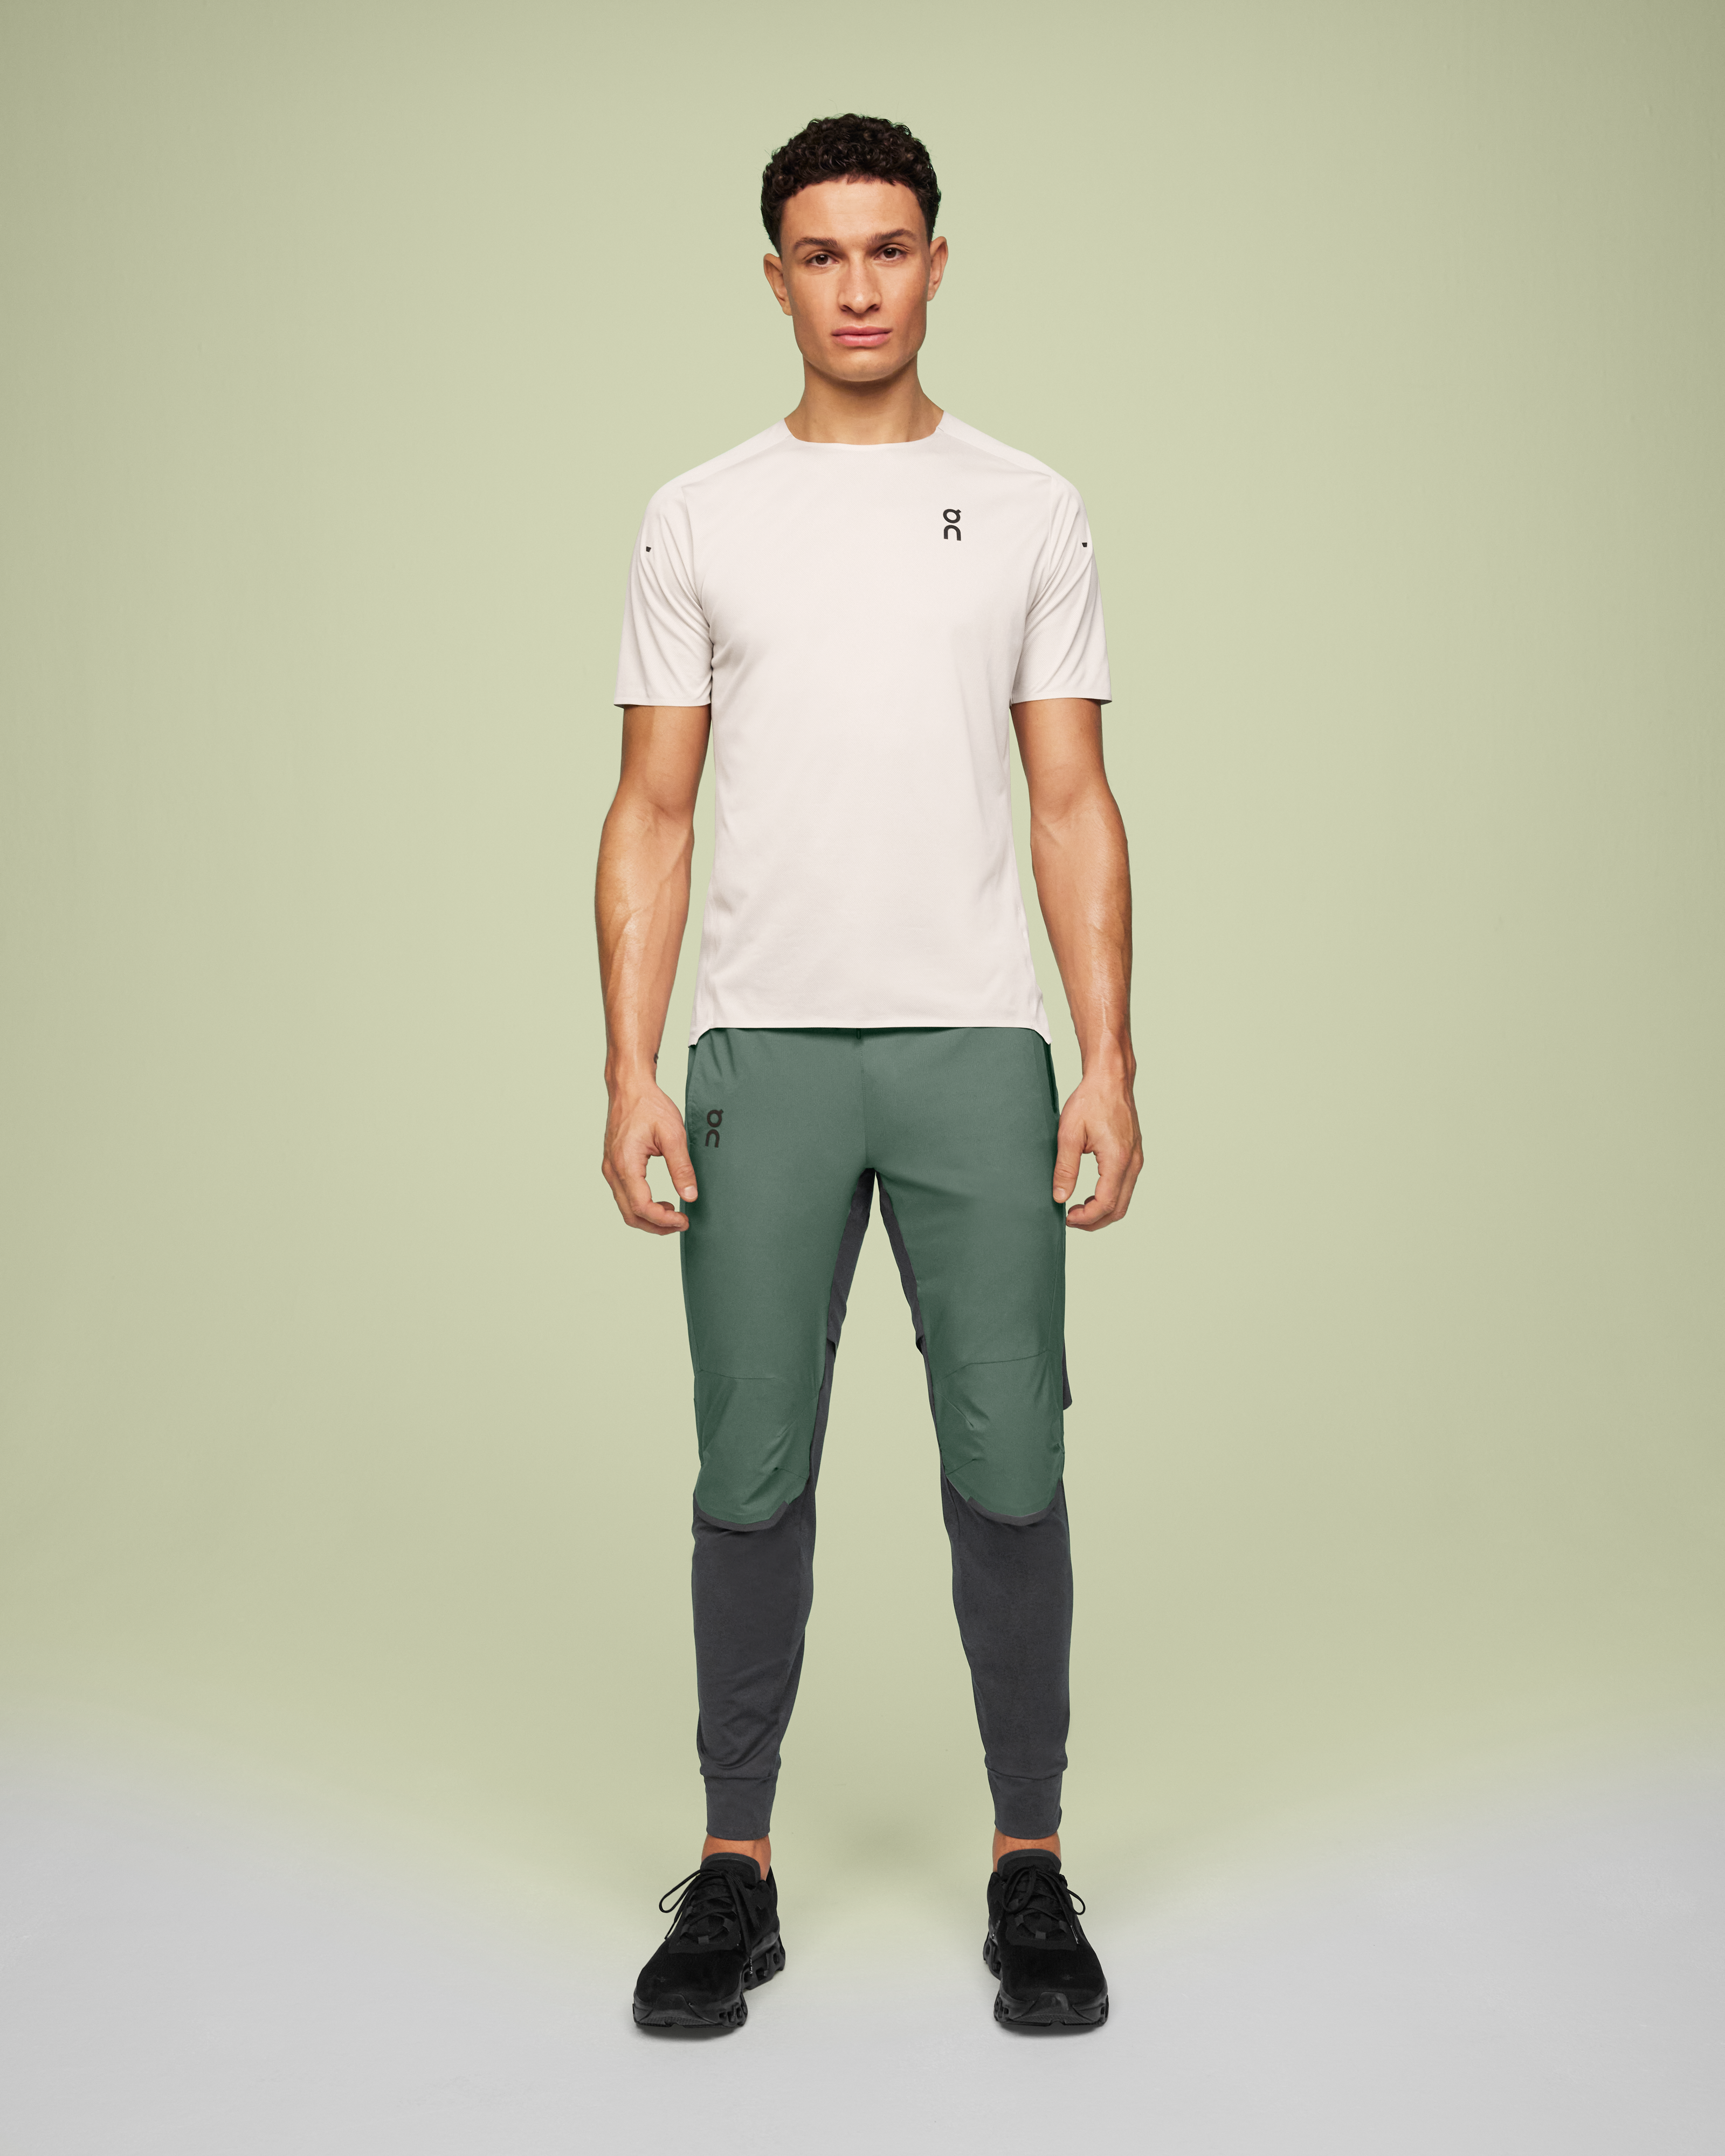 RUNNING TIGHTS Contoured running leggings - Men - Diadora Online Store